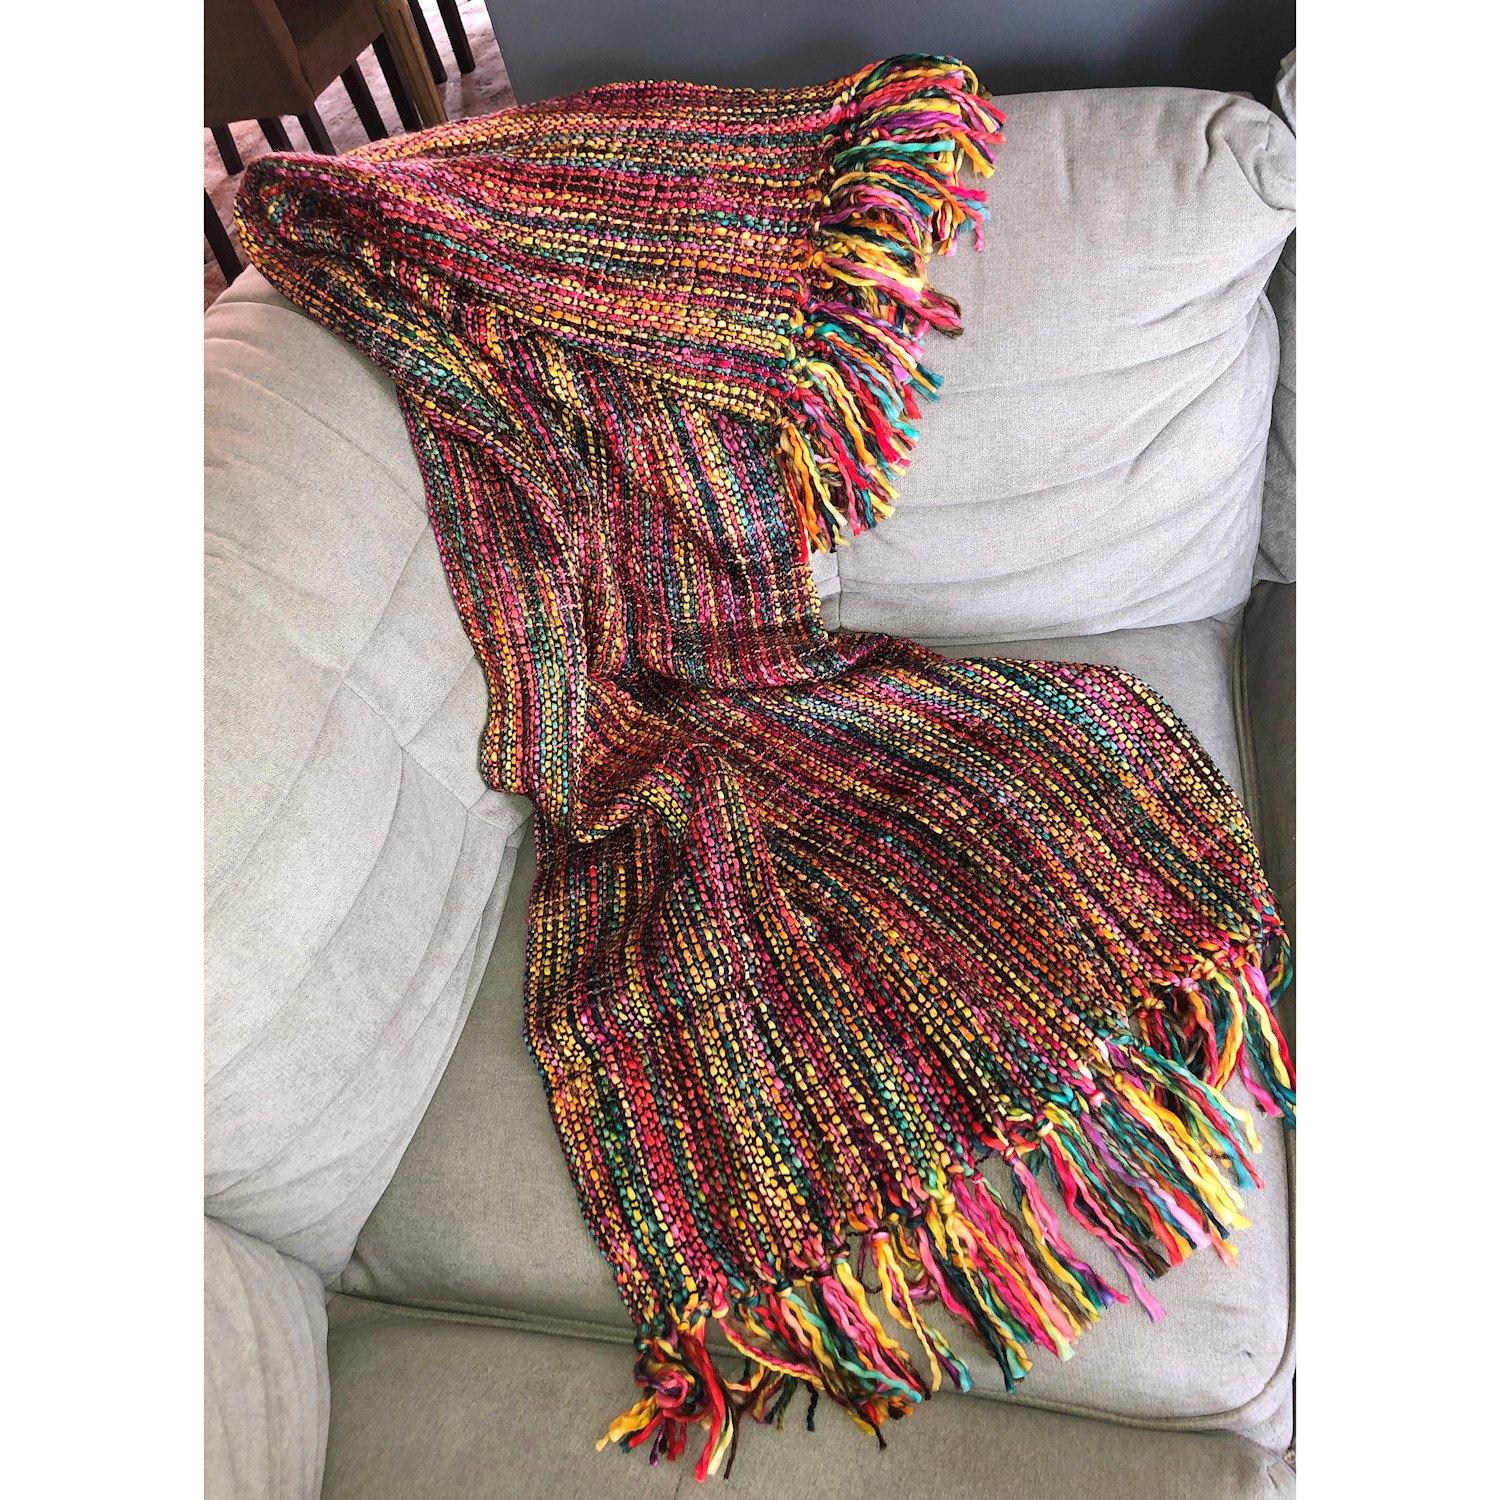 Art And Artifact Fringe Throw Blanket Chunky Knit Decorative Warm